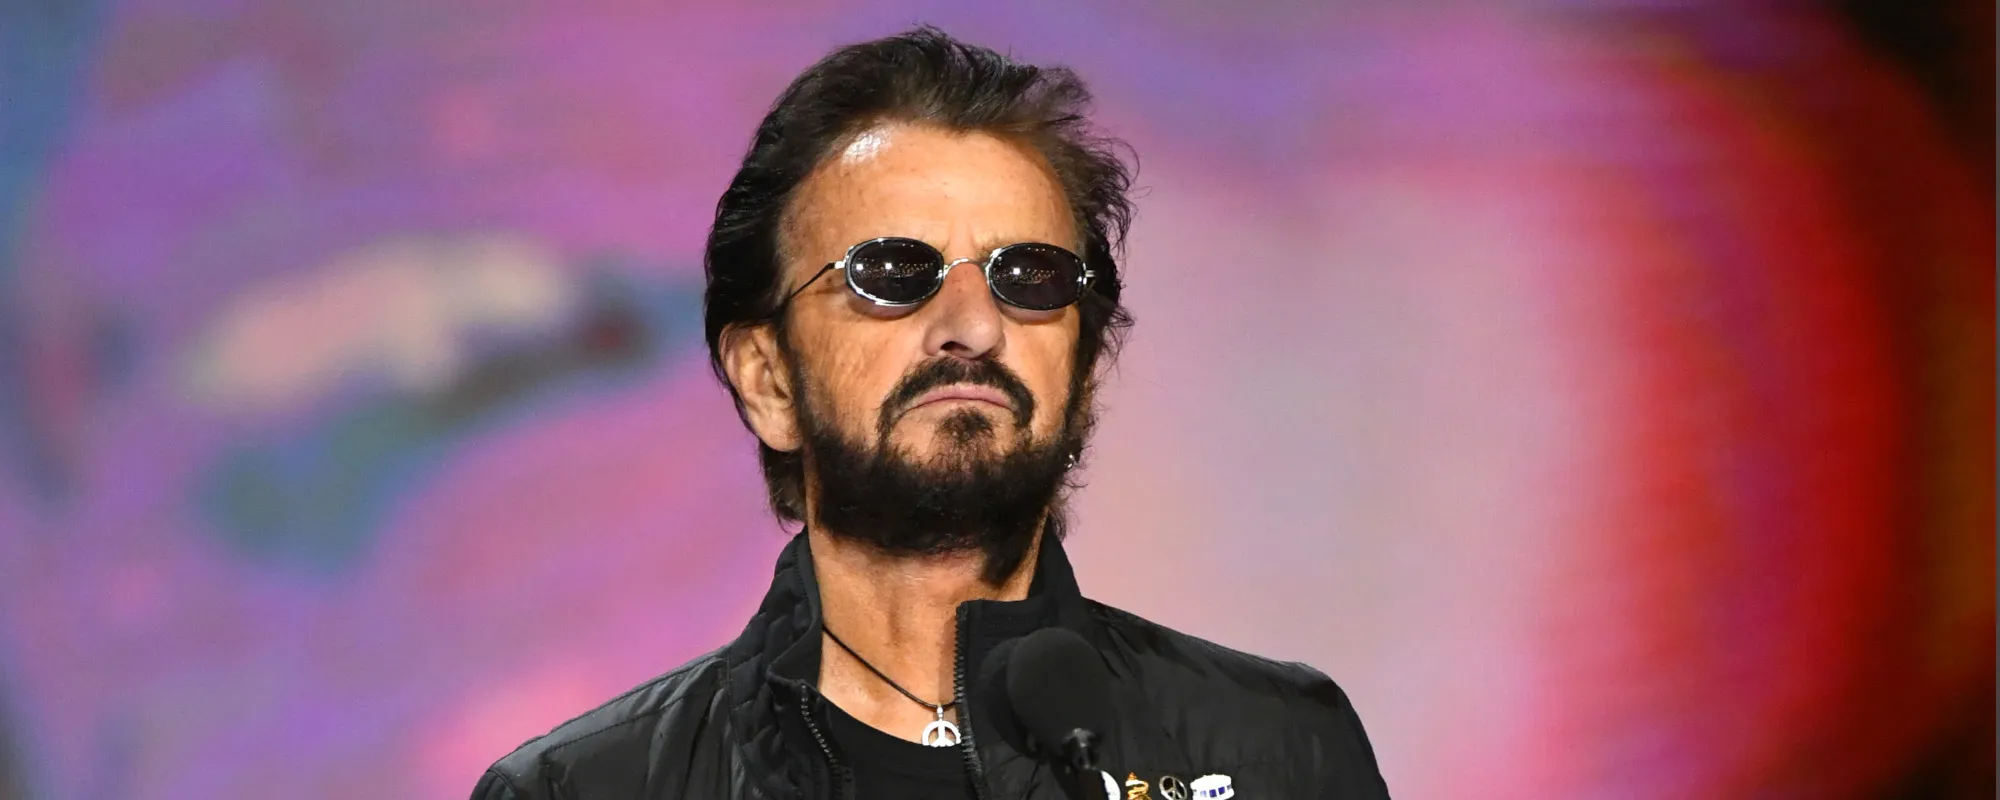 Ringo Starr Releases New Music Video to Celebrate ‘EP3’ Vinyl